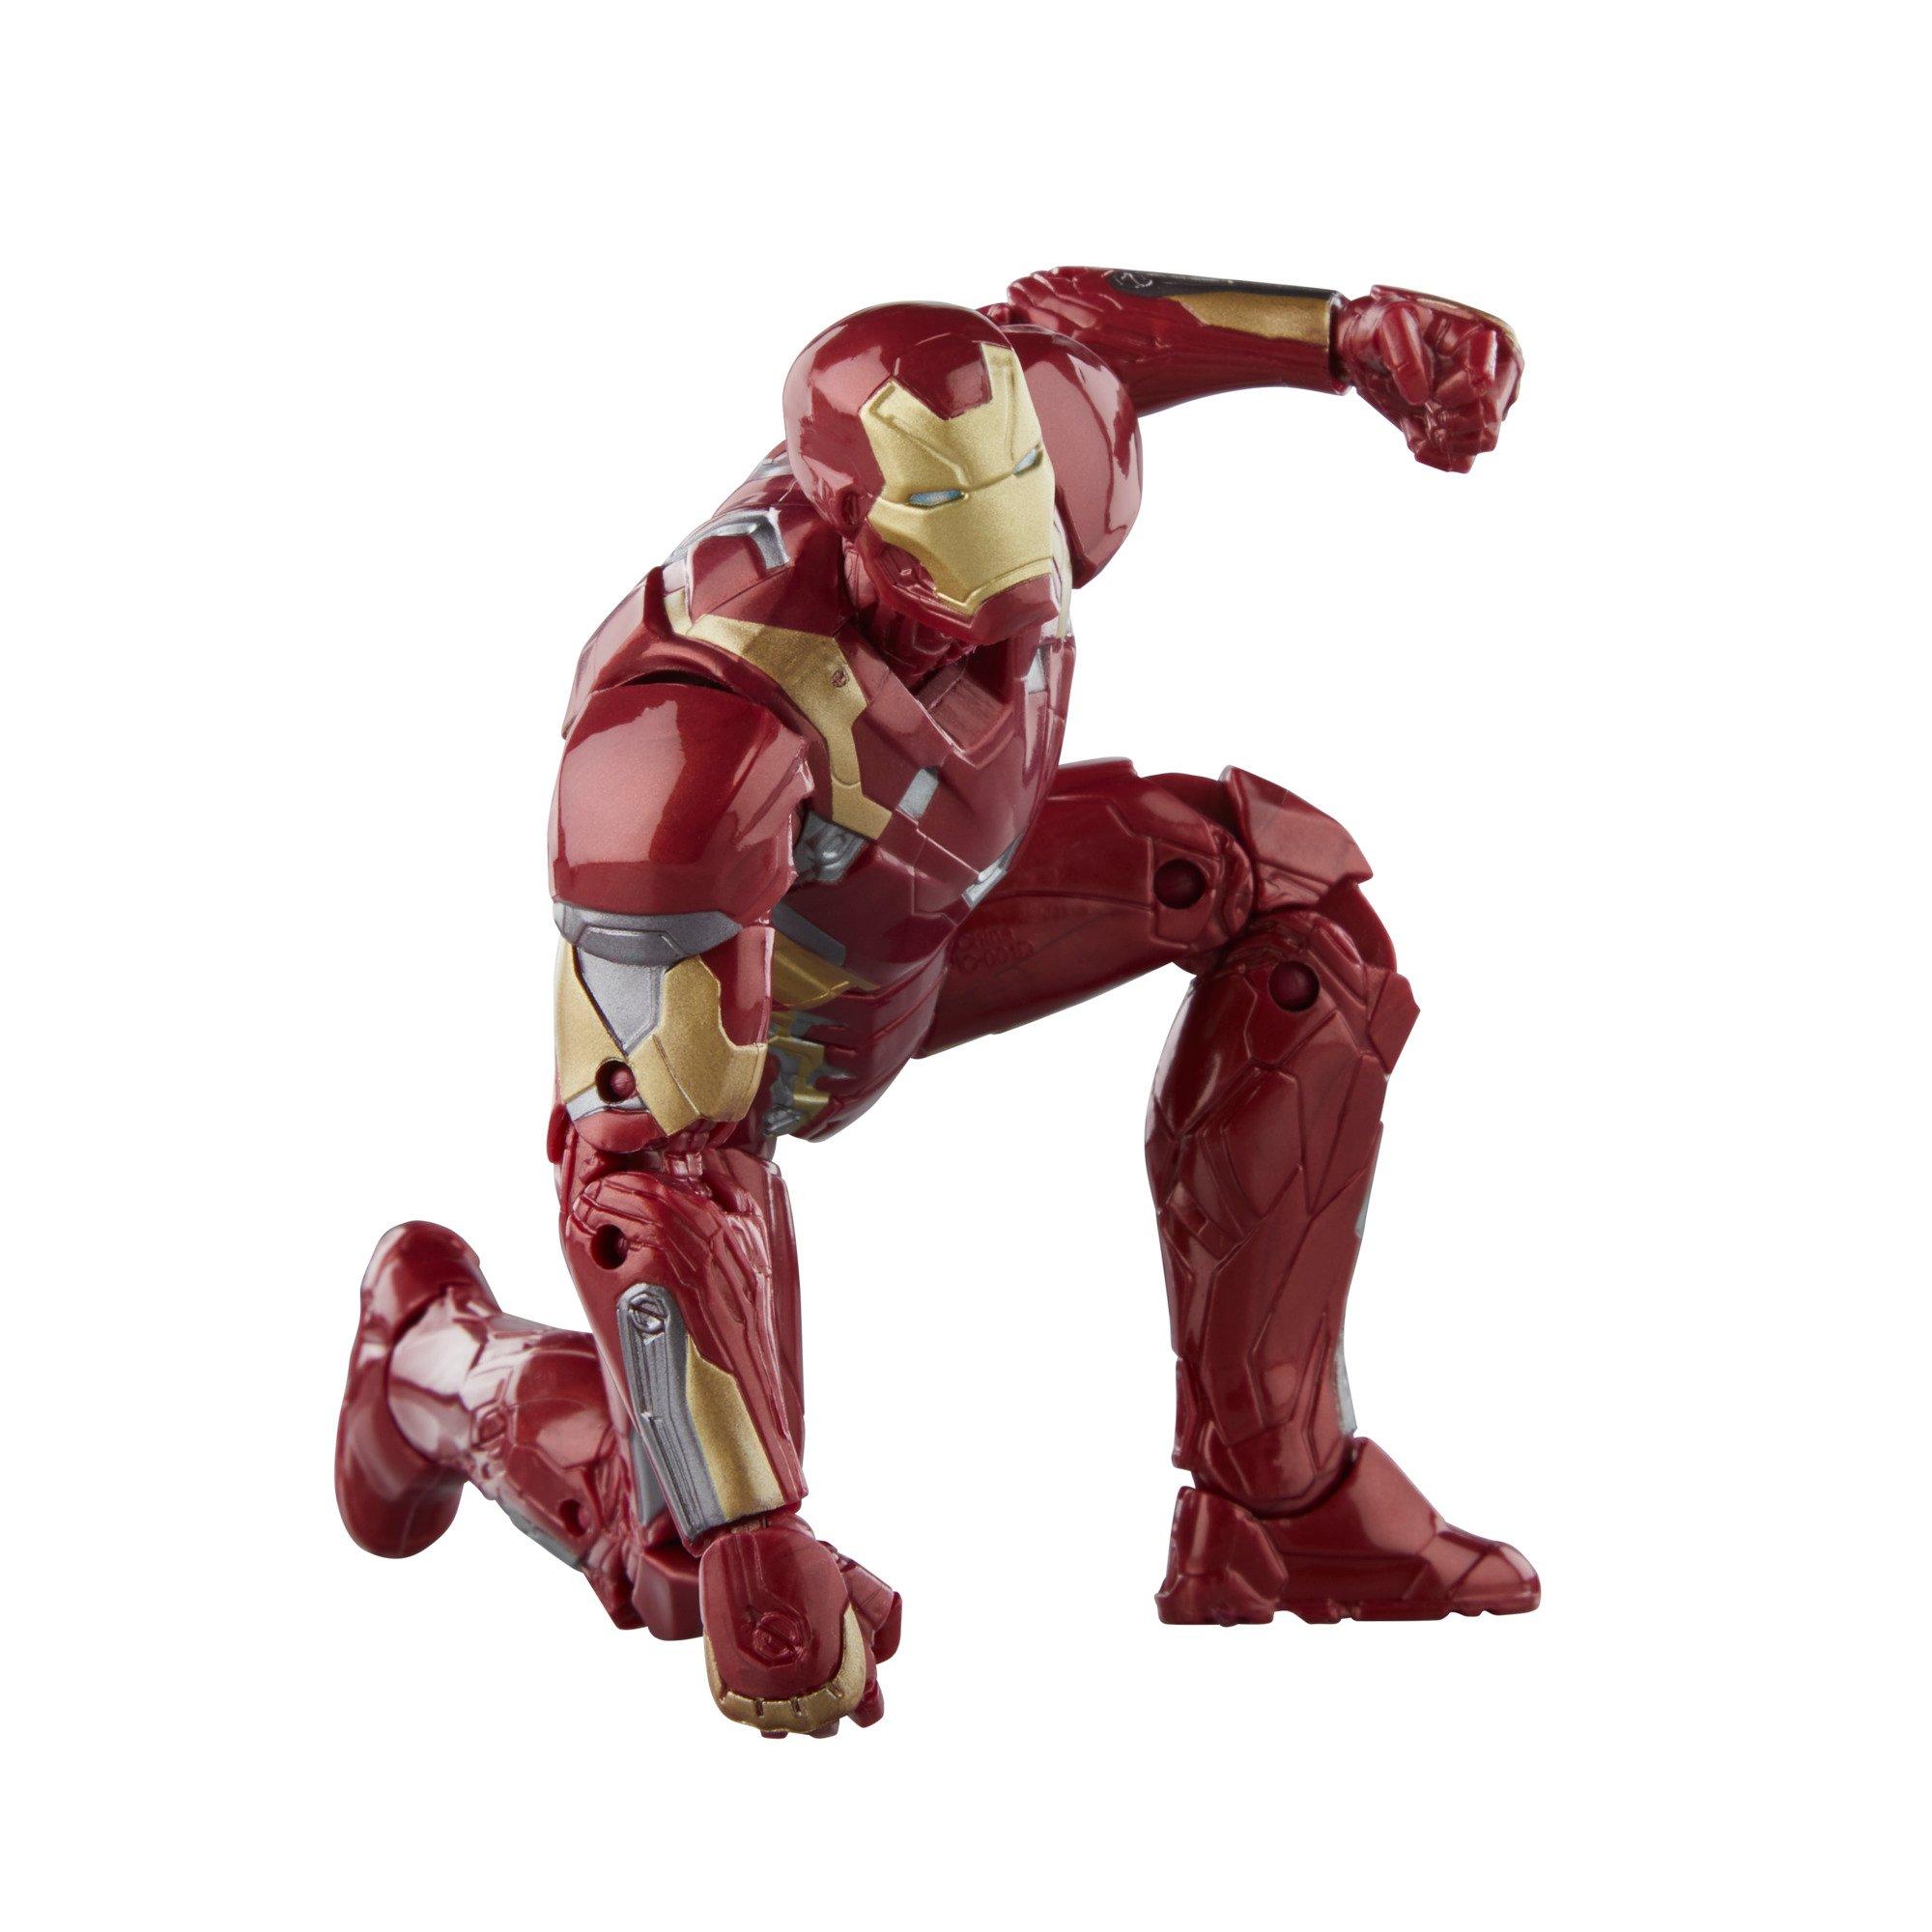 Hasbro Marvel Legend Series The Infinity Saga Iron Man Mark 46 - 6-in Action Figure